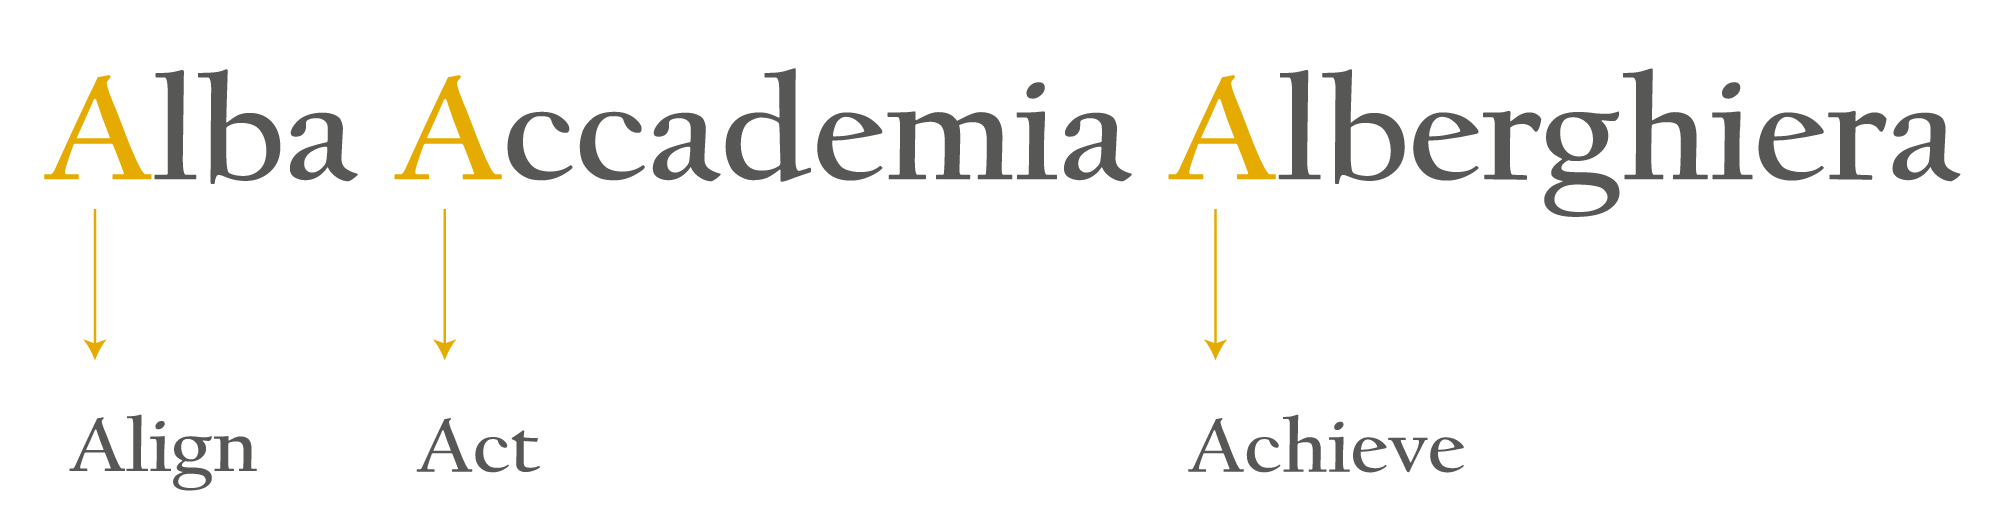 Alba Academy